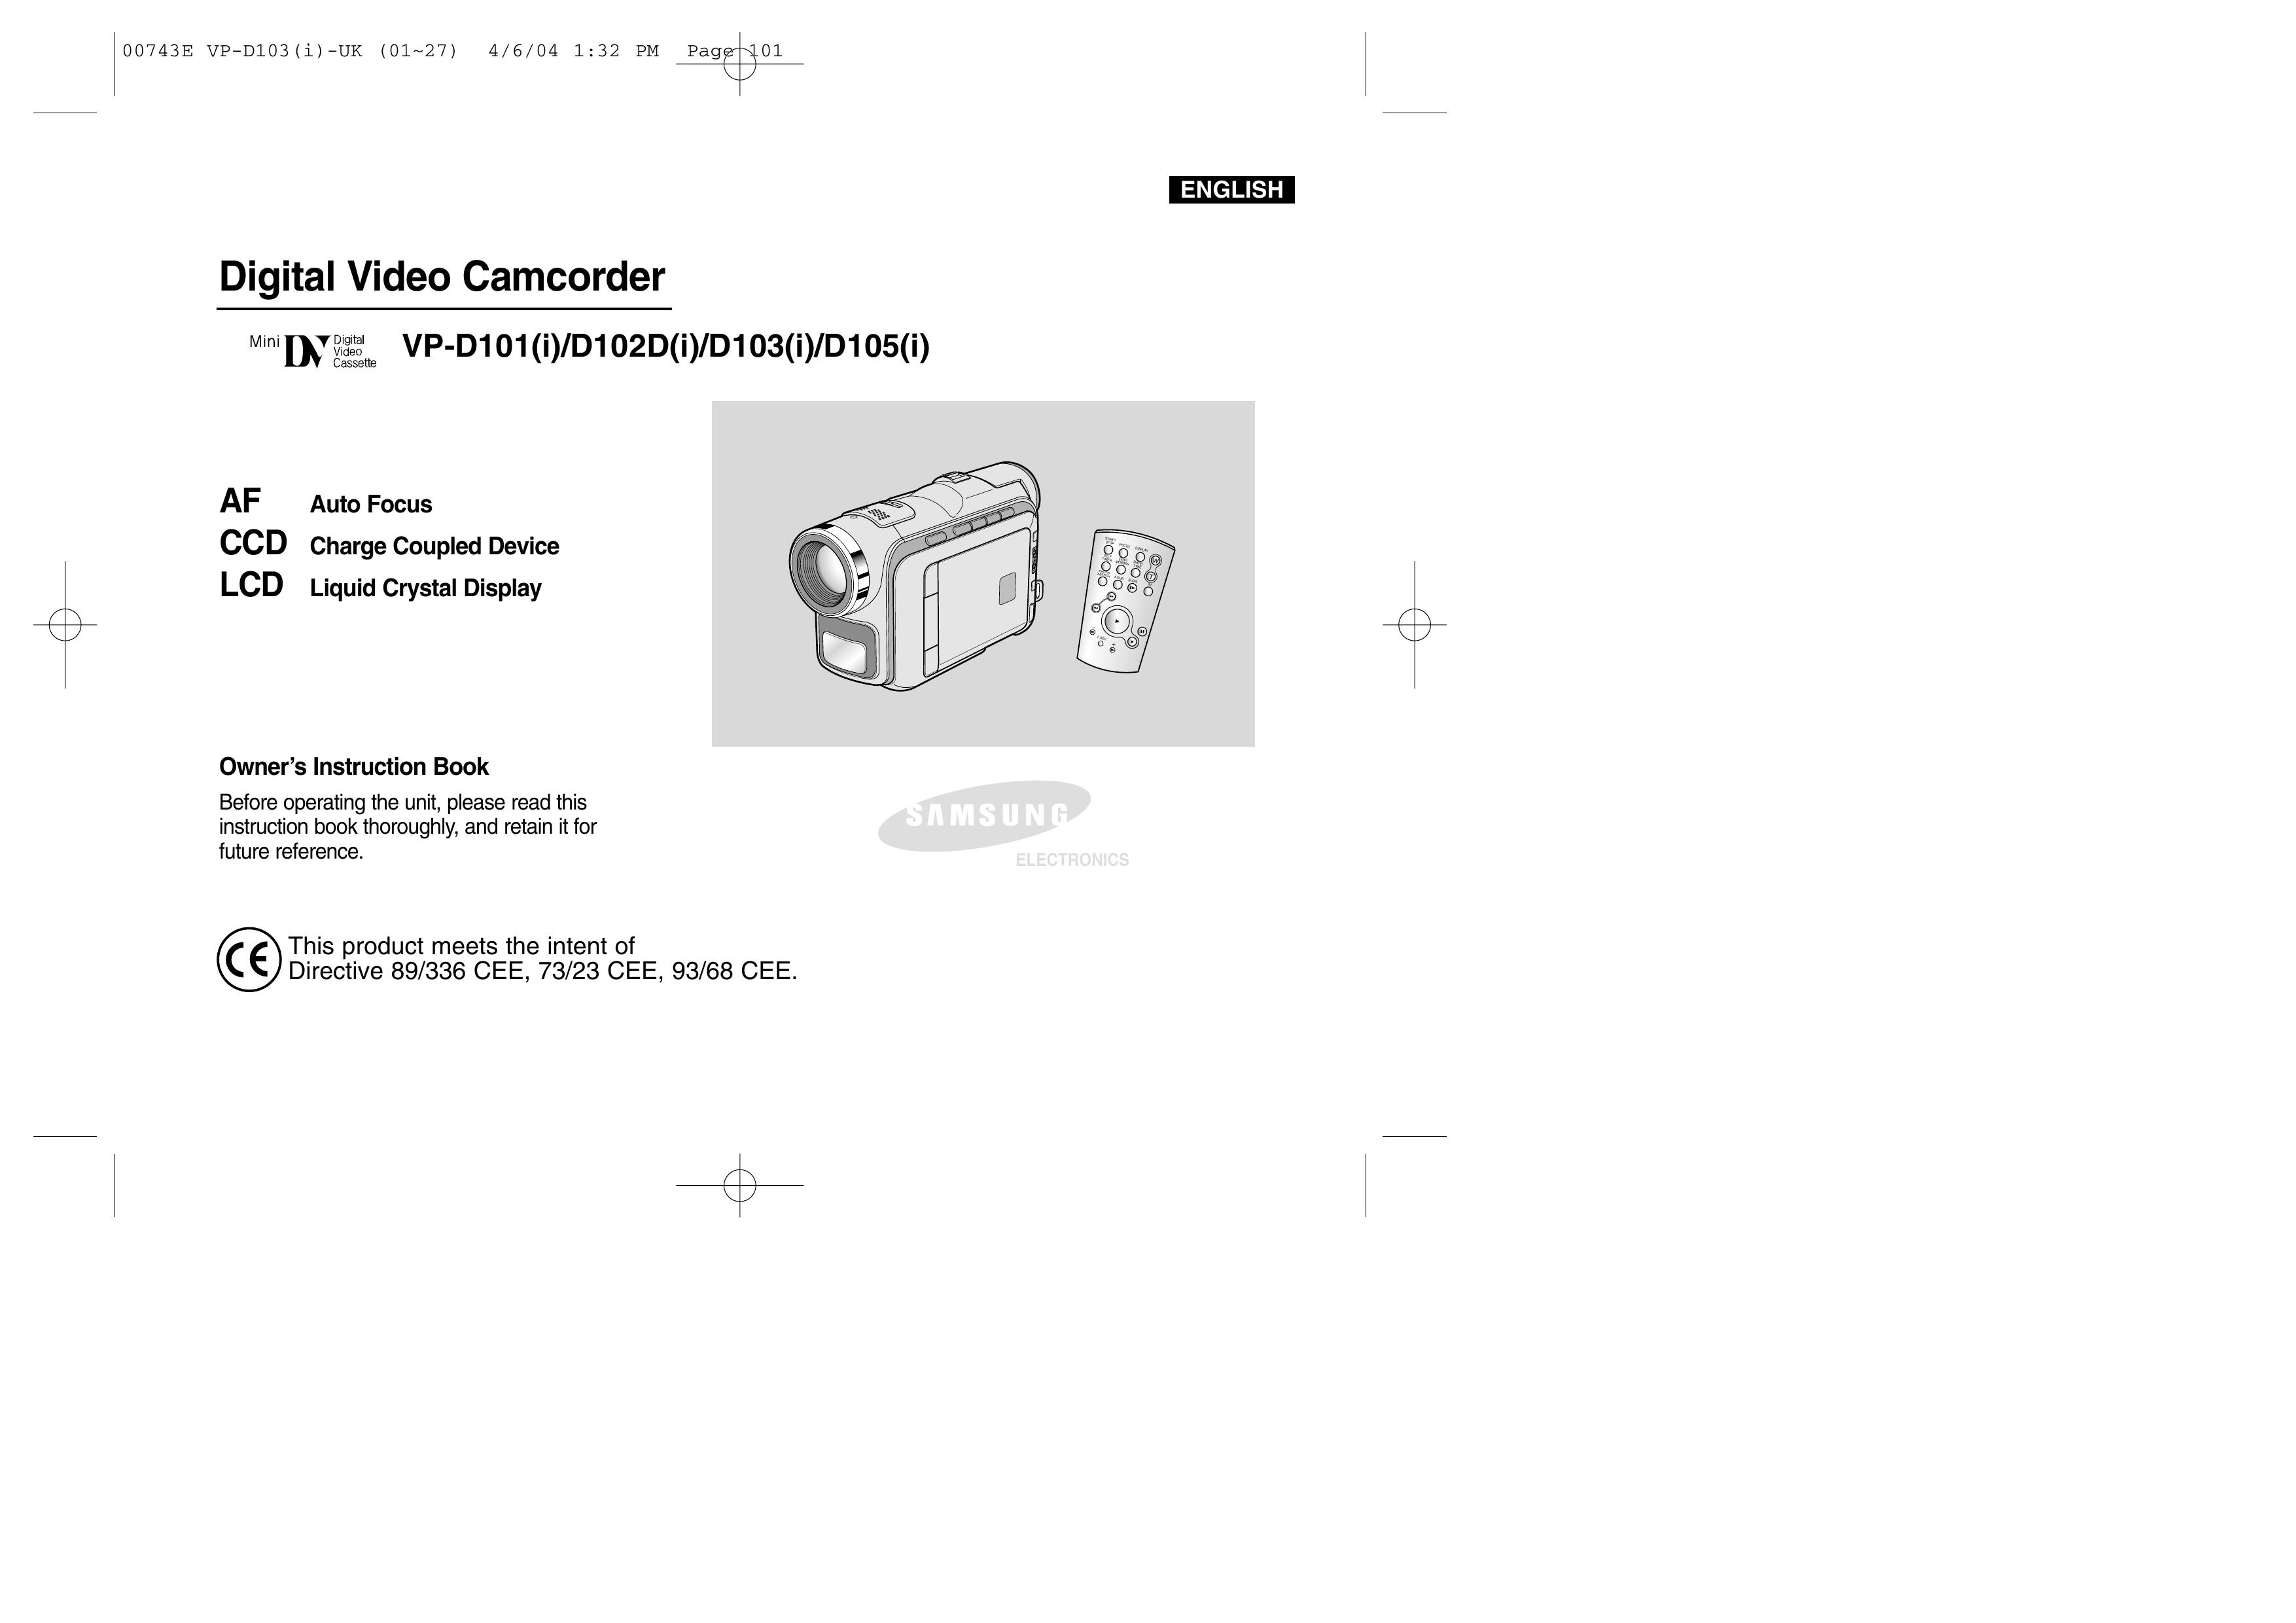 Samsung D103 Camcorder User Manual